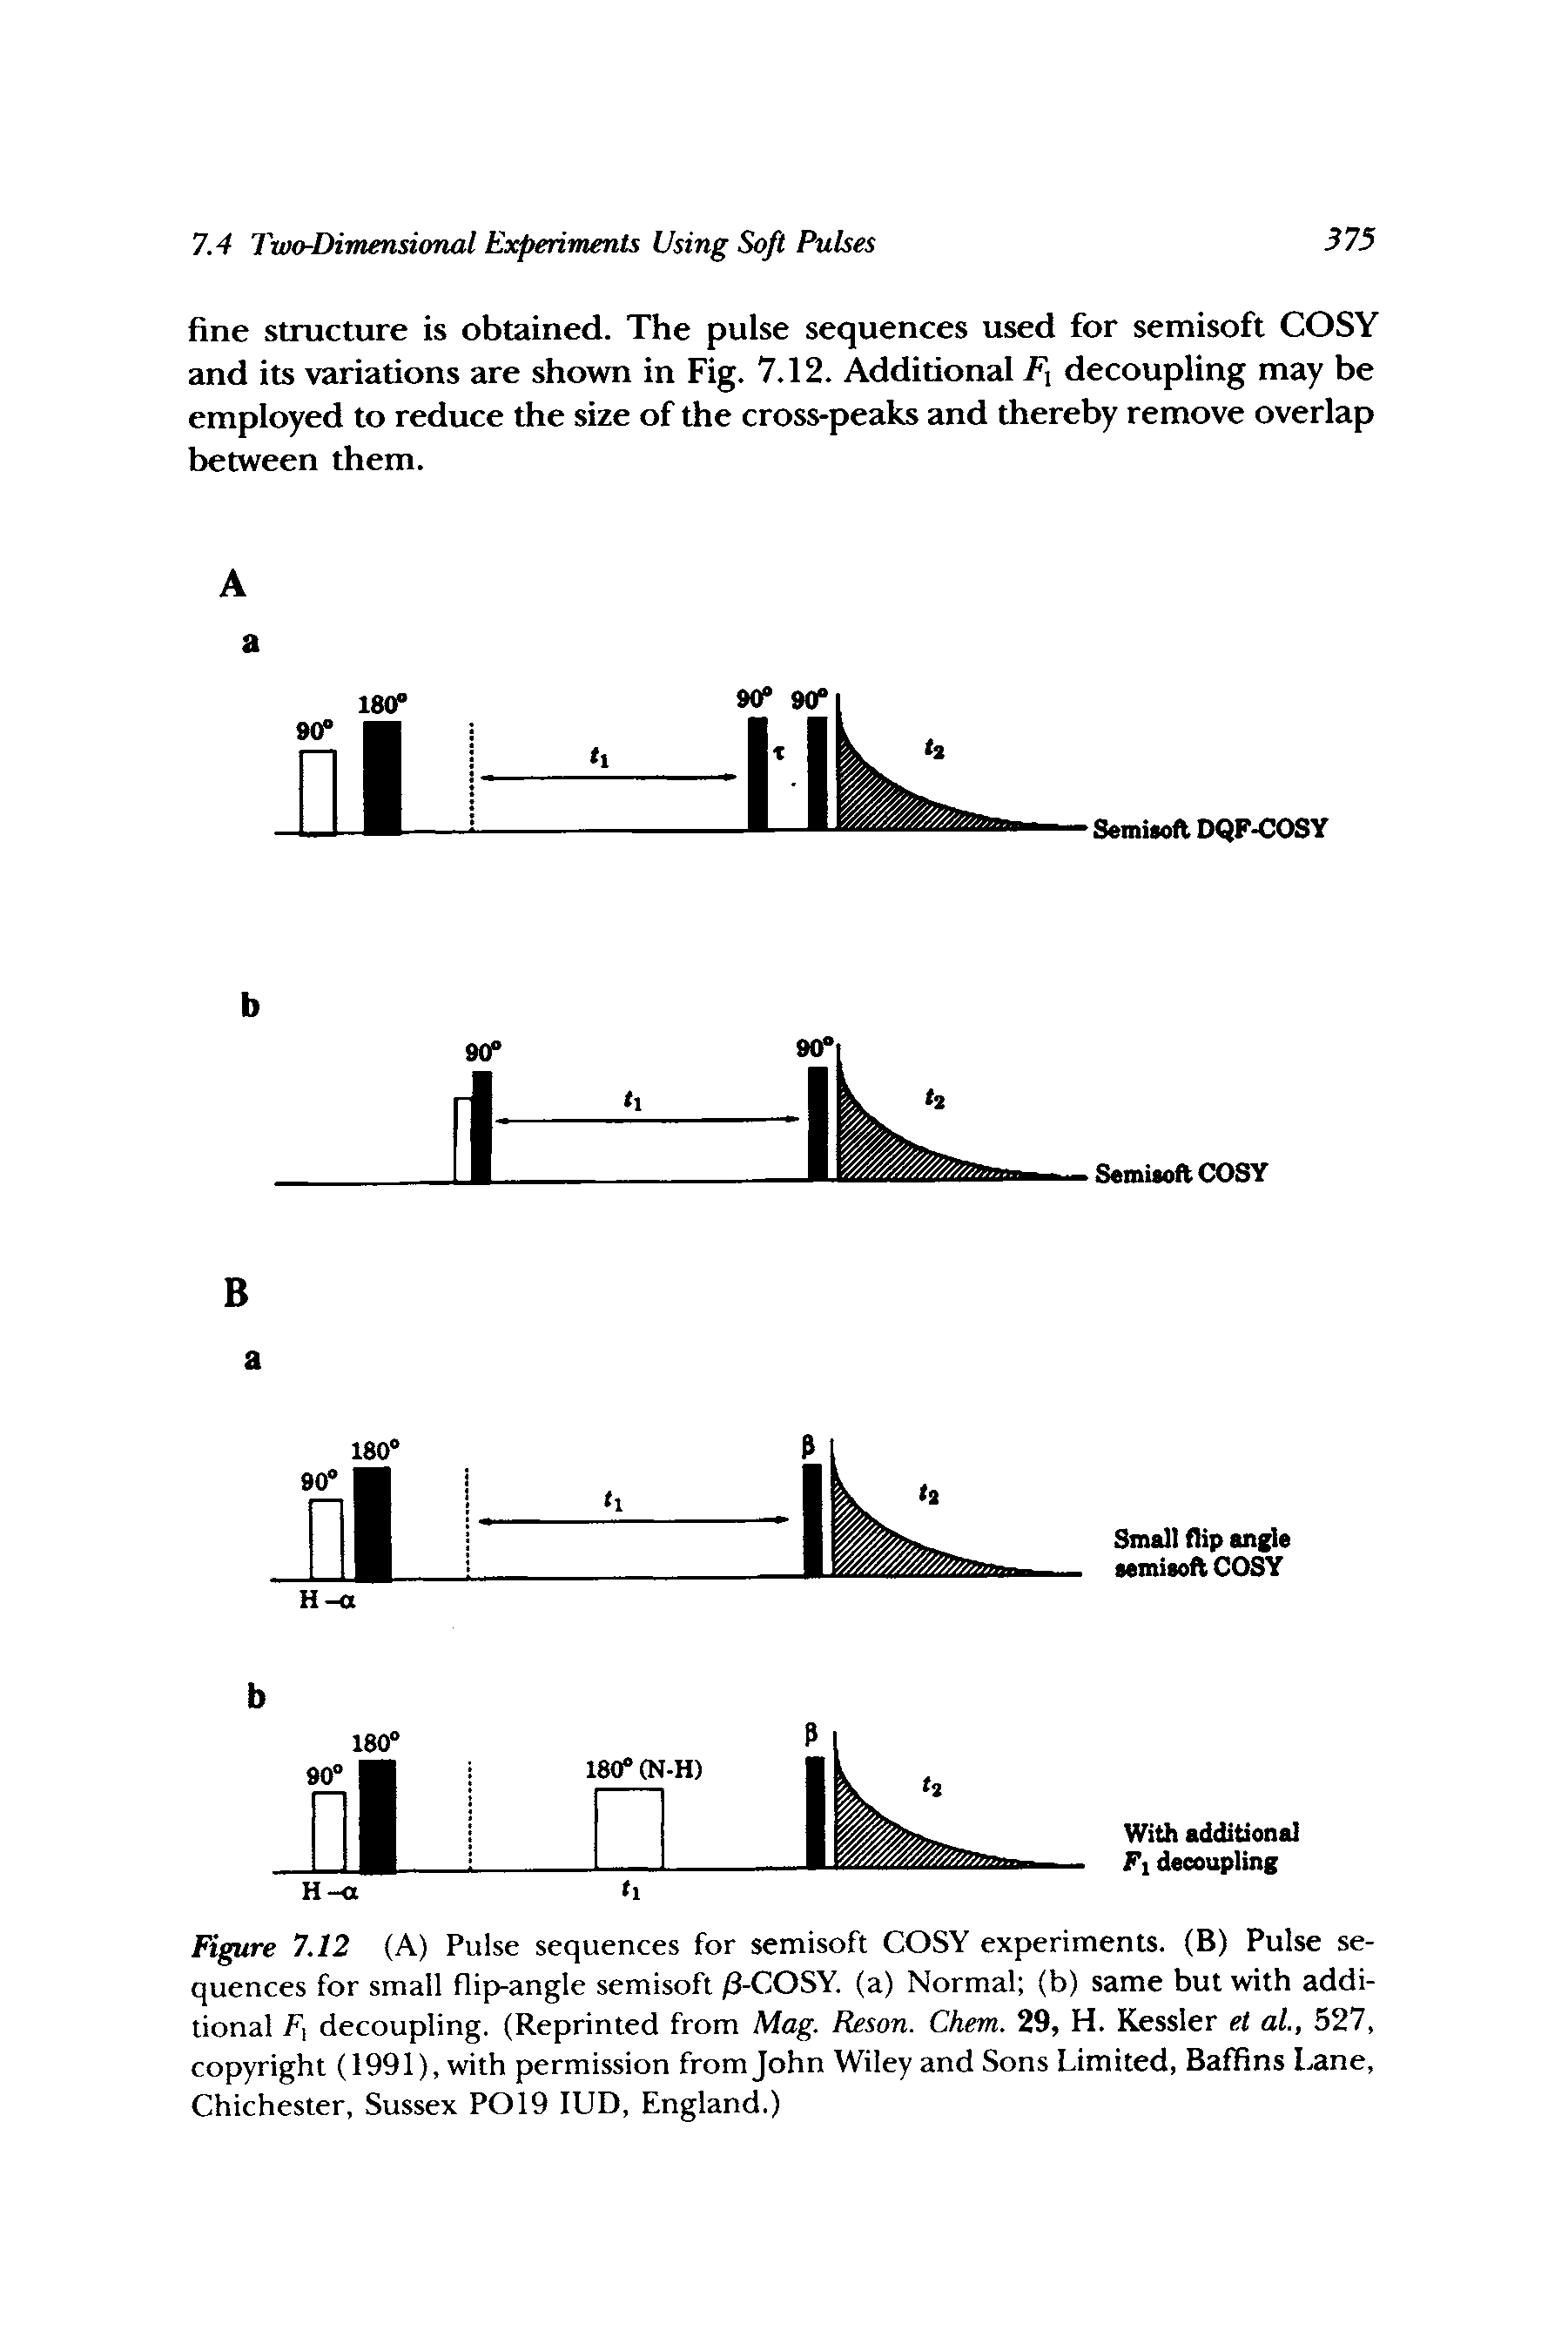 Figure 7.12 (A) Pulse sequences for semisoft COSY experiments. (B) Pulse se-...